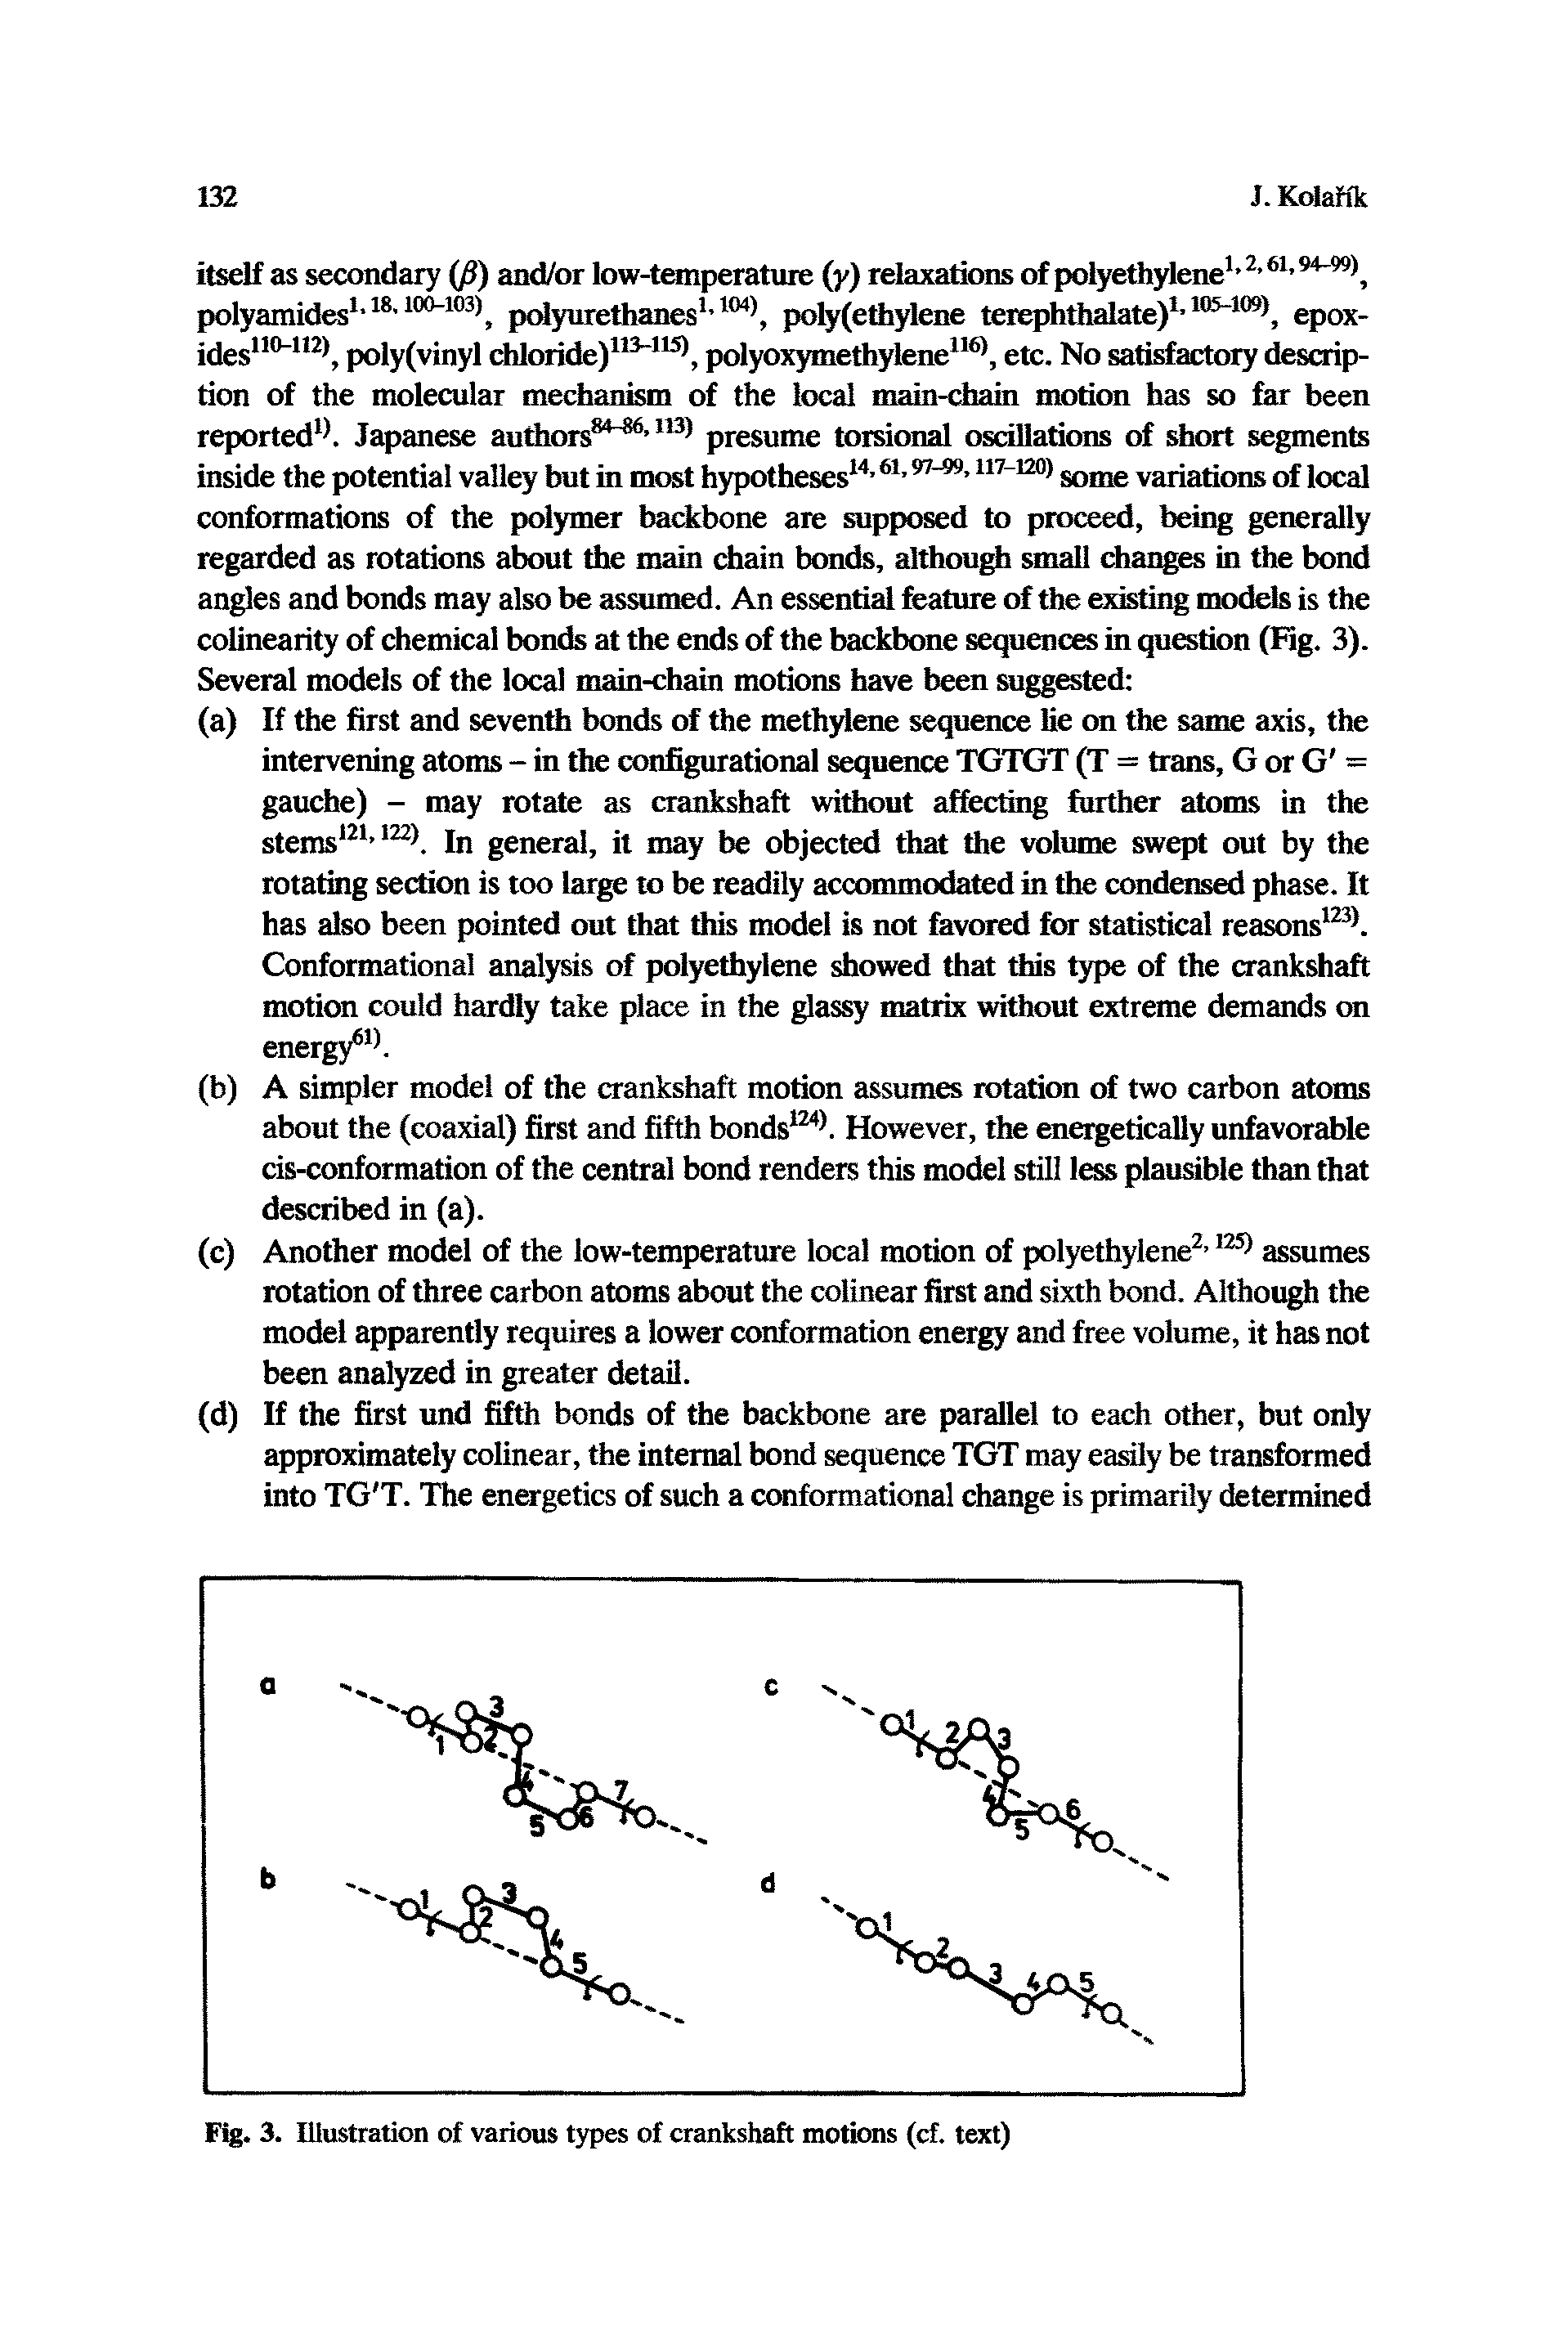 Fig. 3. Illustration of various types of crankshaft motions (cf. text)...